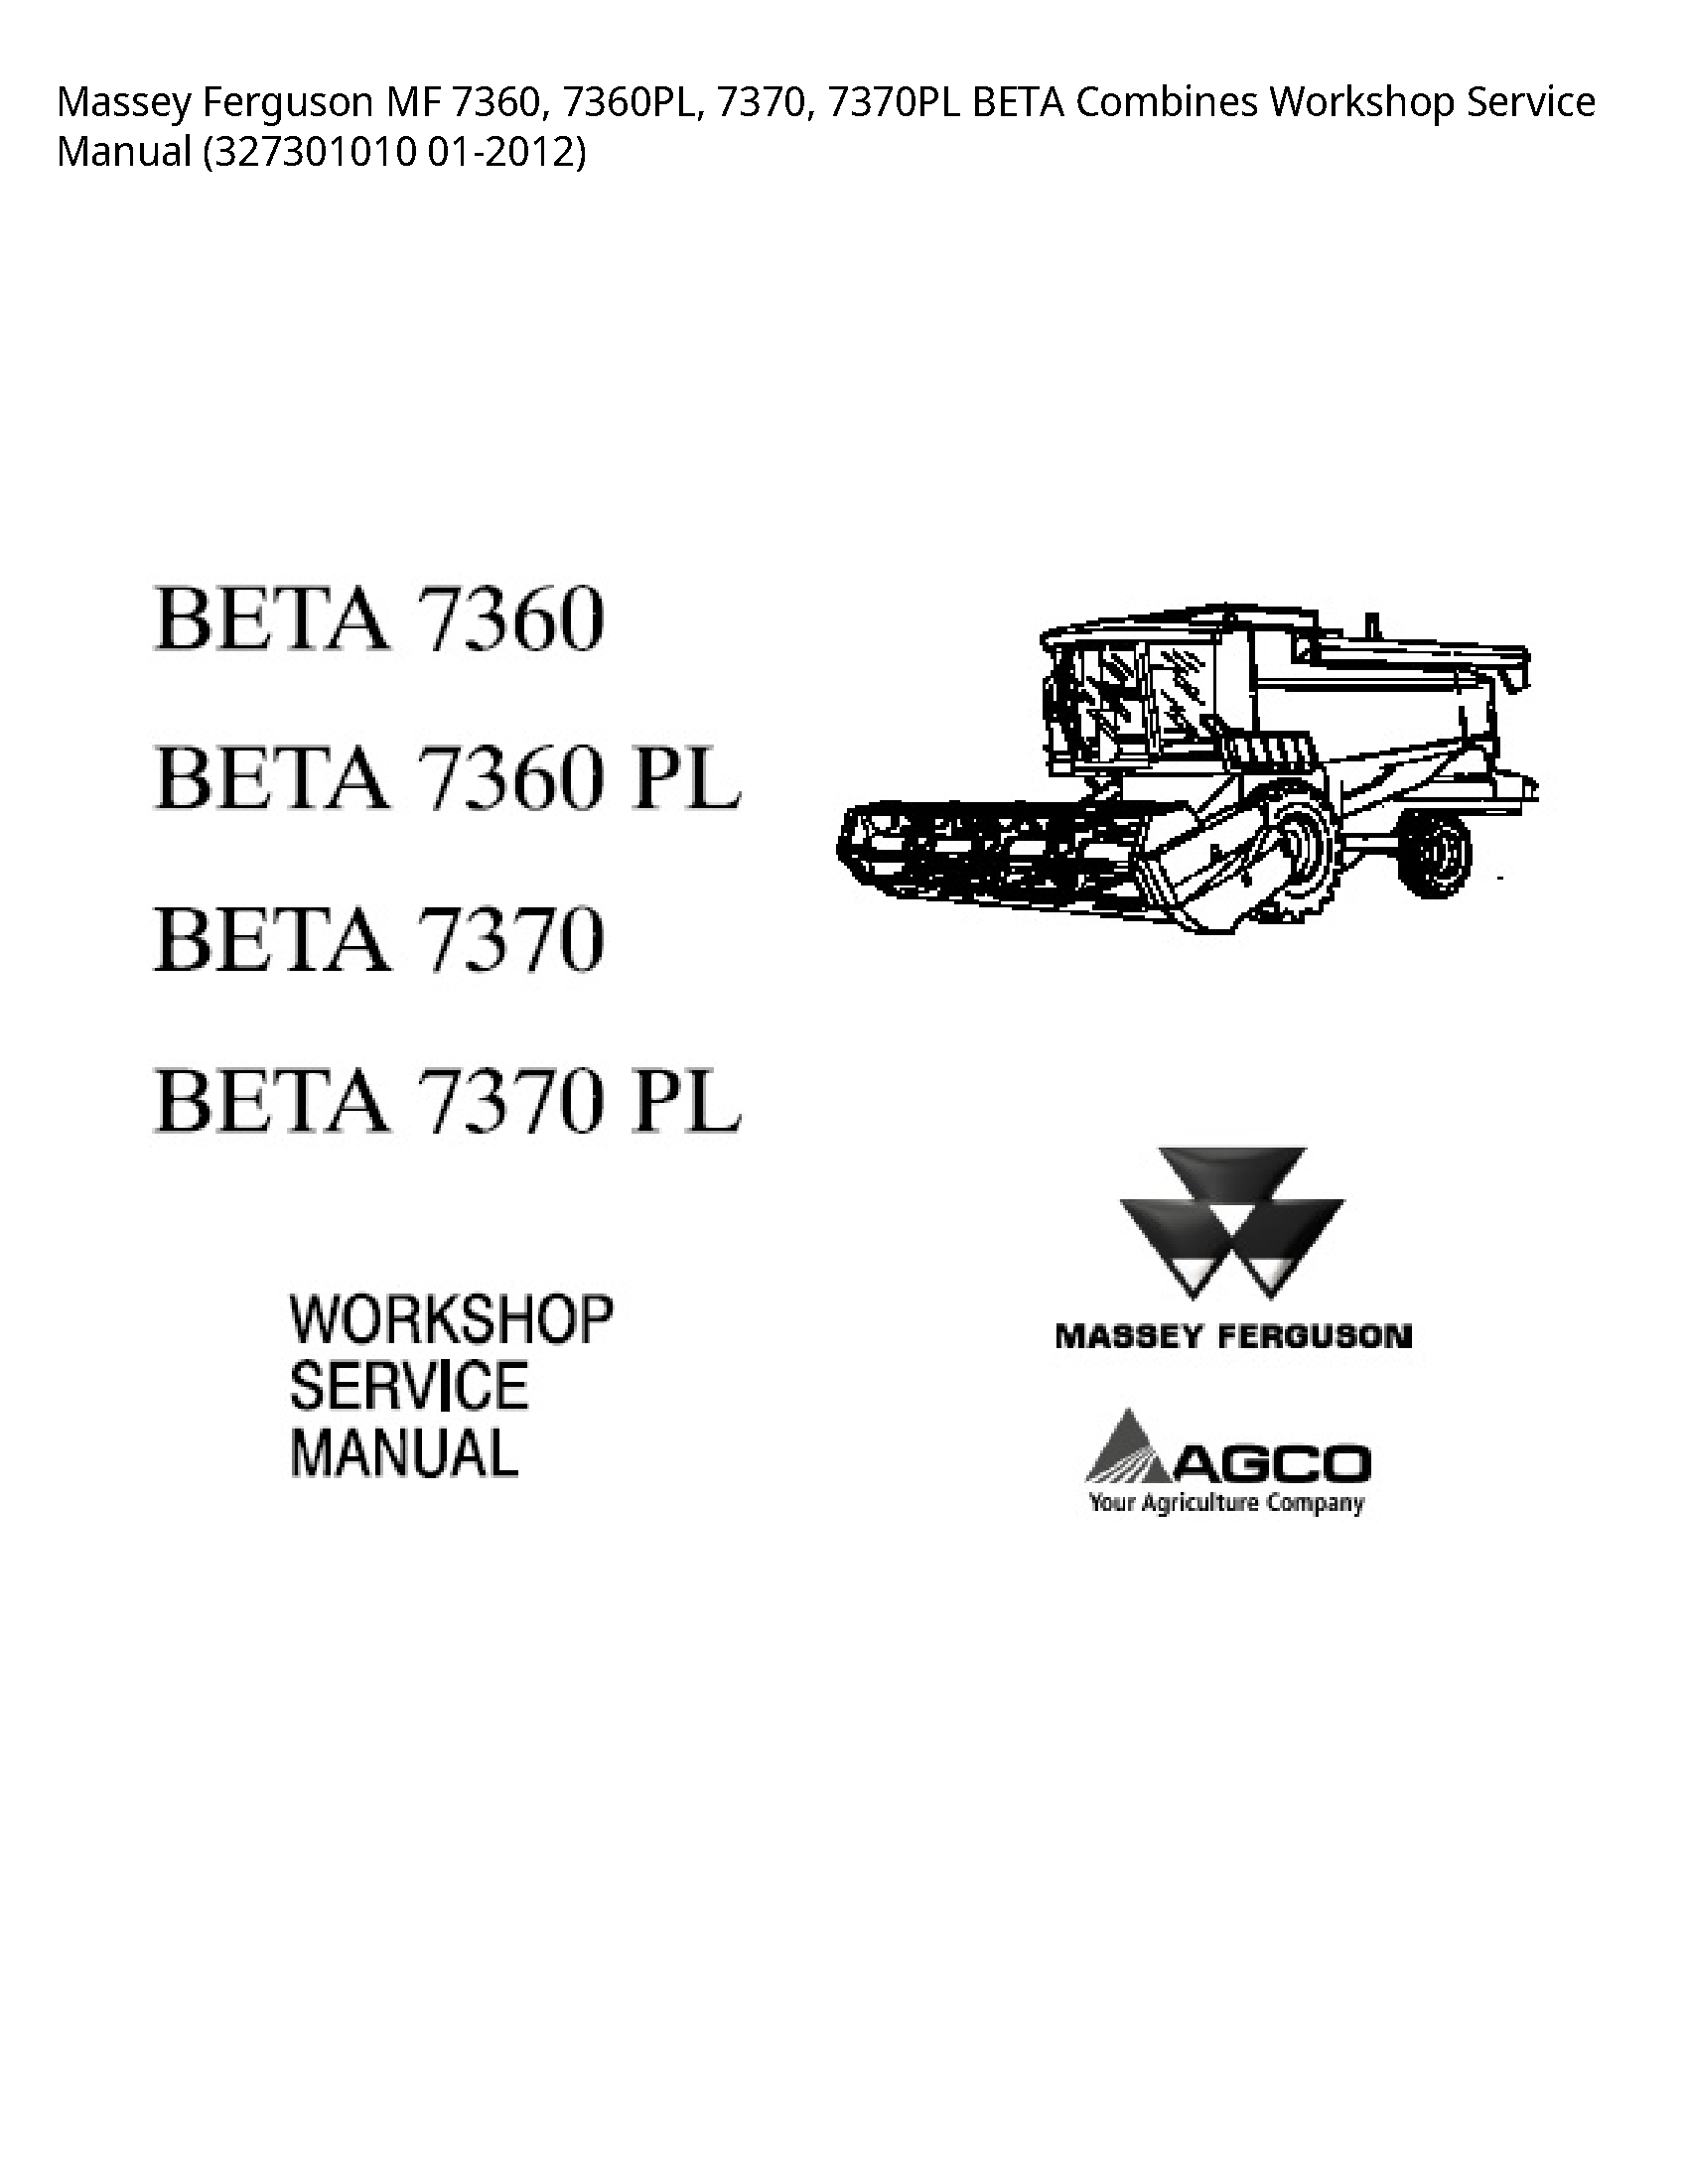 Massey Ferguson 7360 MF BETA Combines Service manual